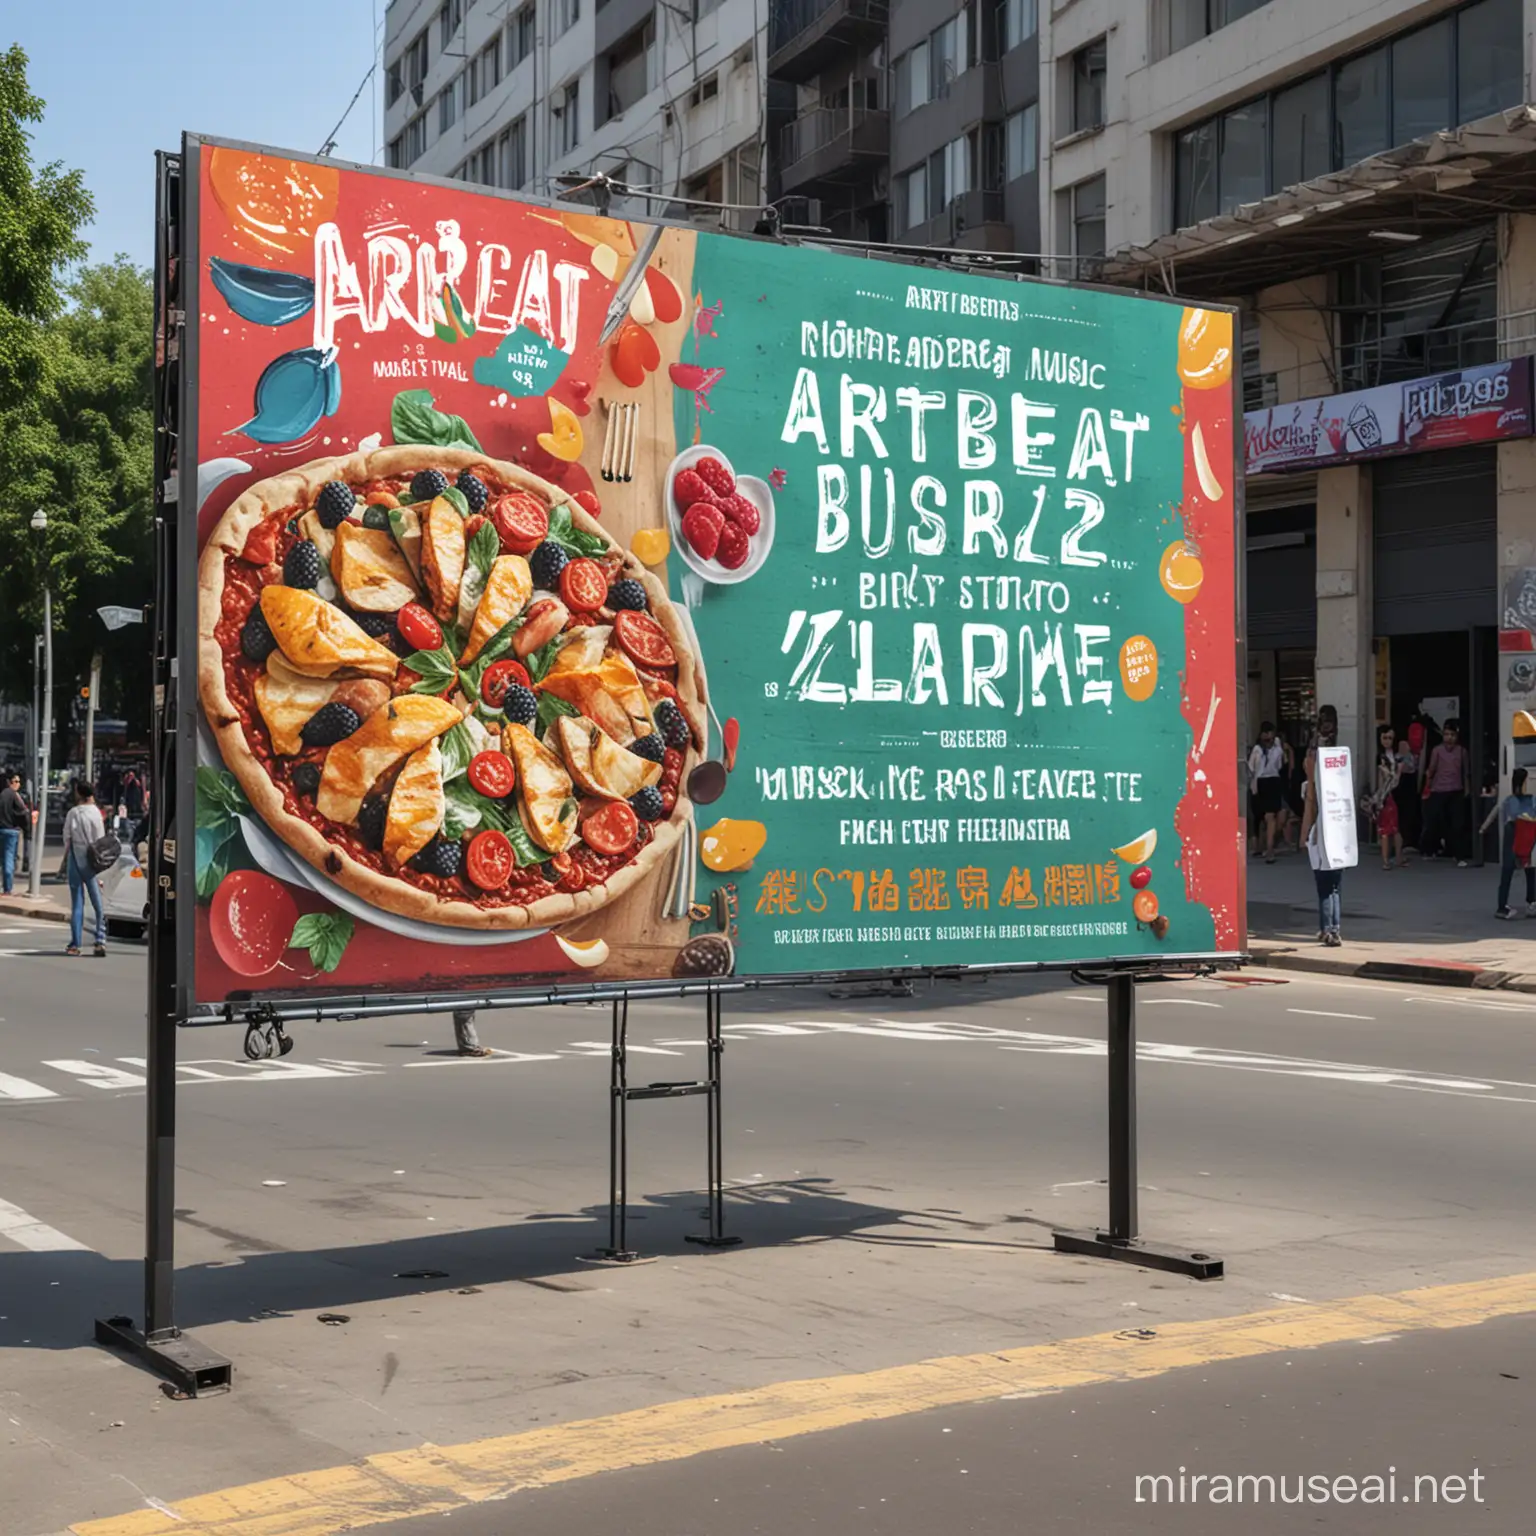 create event billboard that said
"ArtBeat Bistro & Bazaar: Market, Music Festival & Gallery Delights"